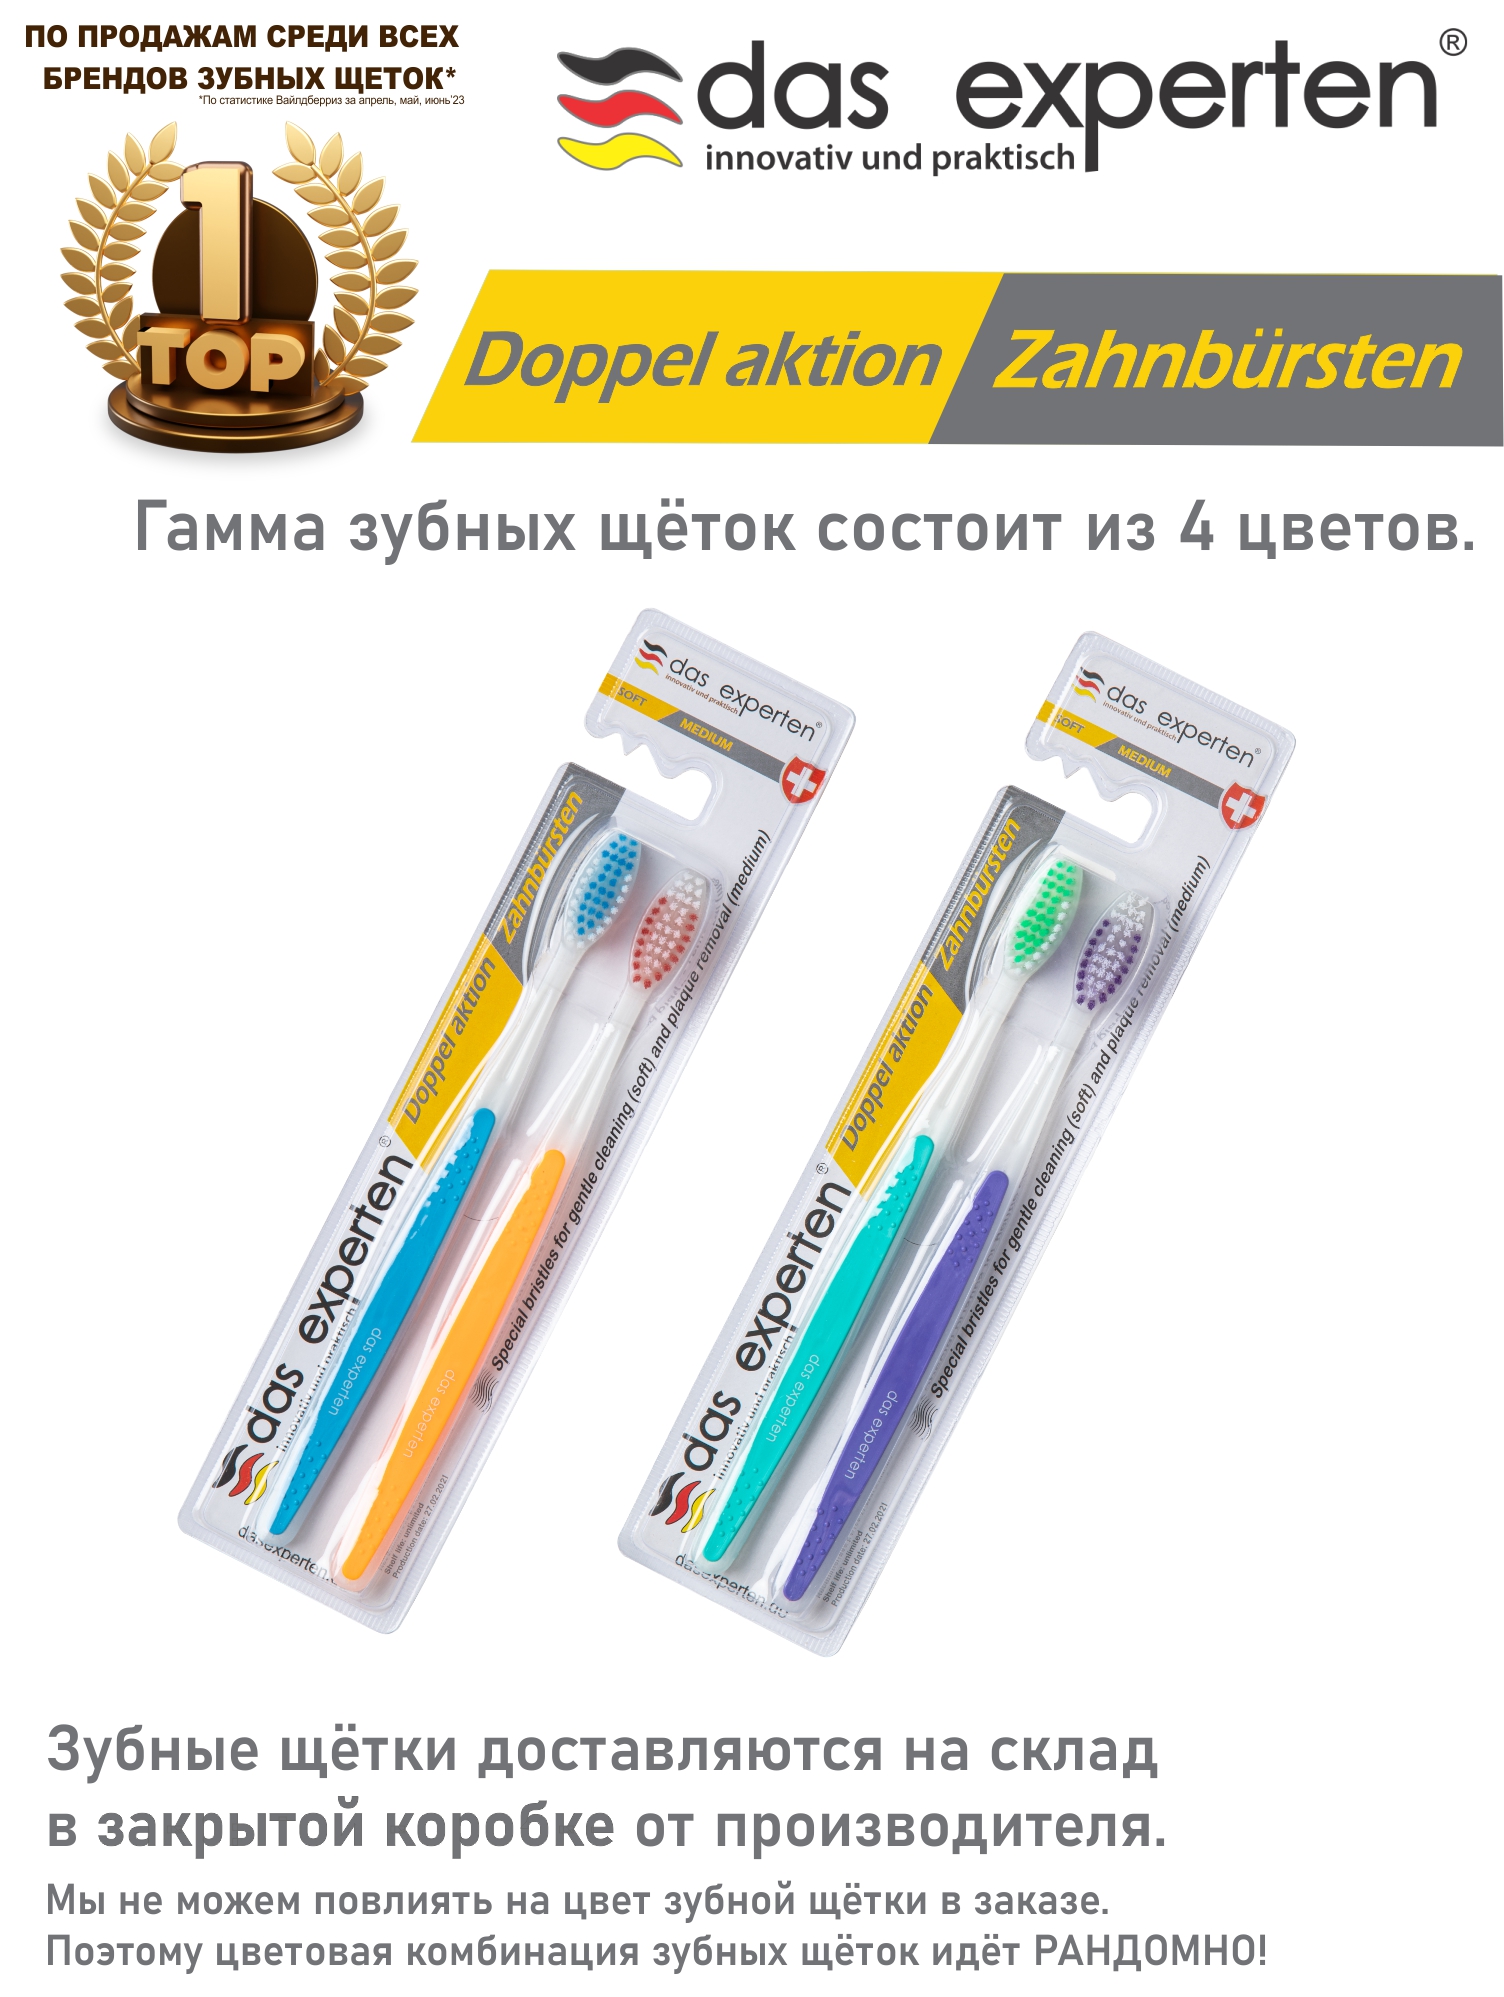 зубные щетки beheart carbon wire gingival protection toothbrush t101 2 шт Зубные щетки Das Experten DOPPEL AKTION 2